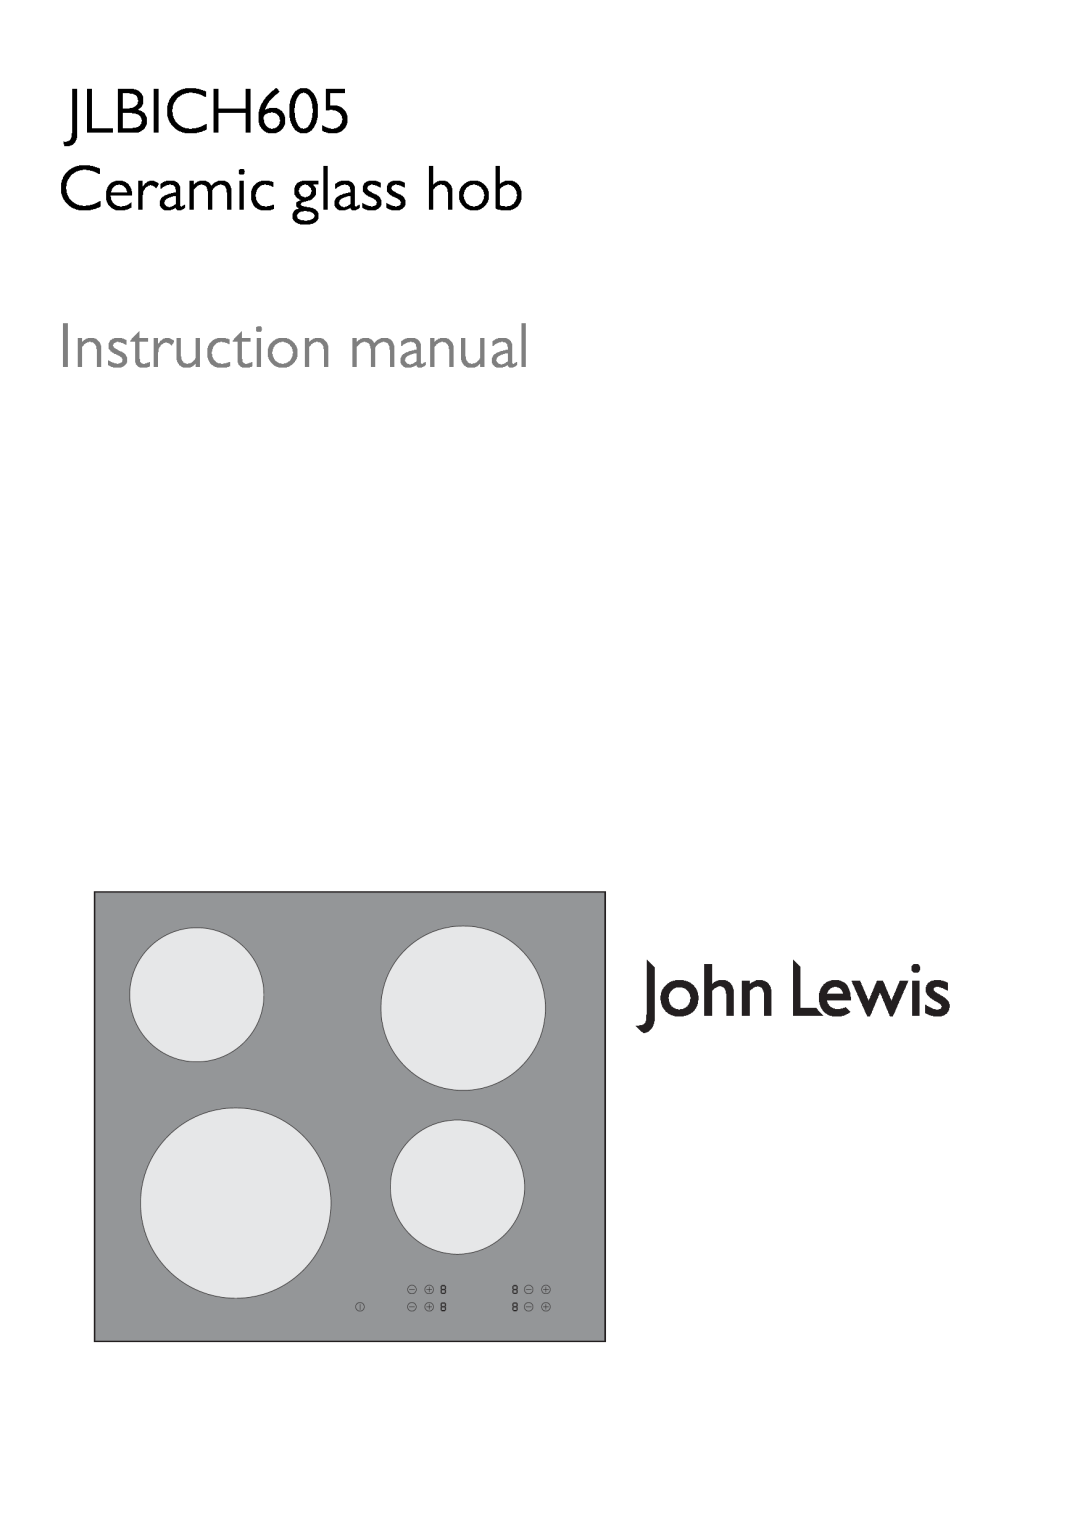 John Lewis instruction manual Instruction manual, JLBICH605 Ceramic glass hob 